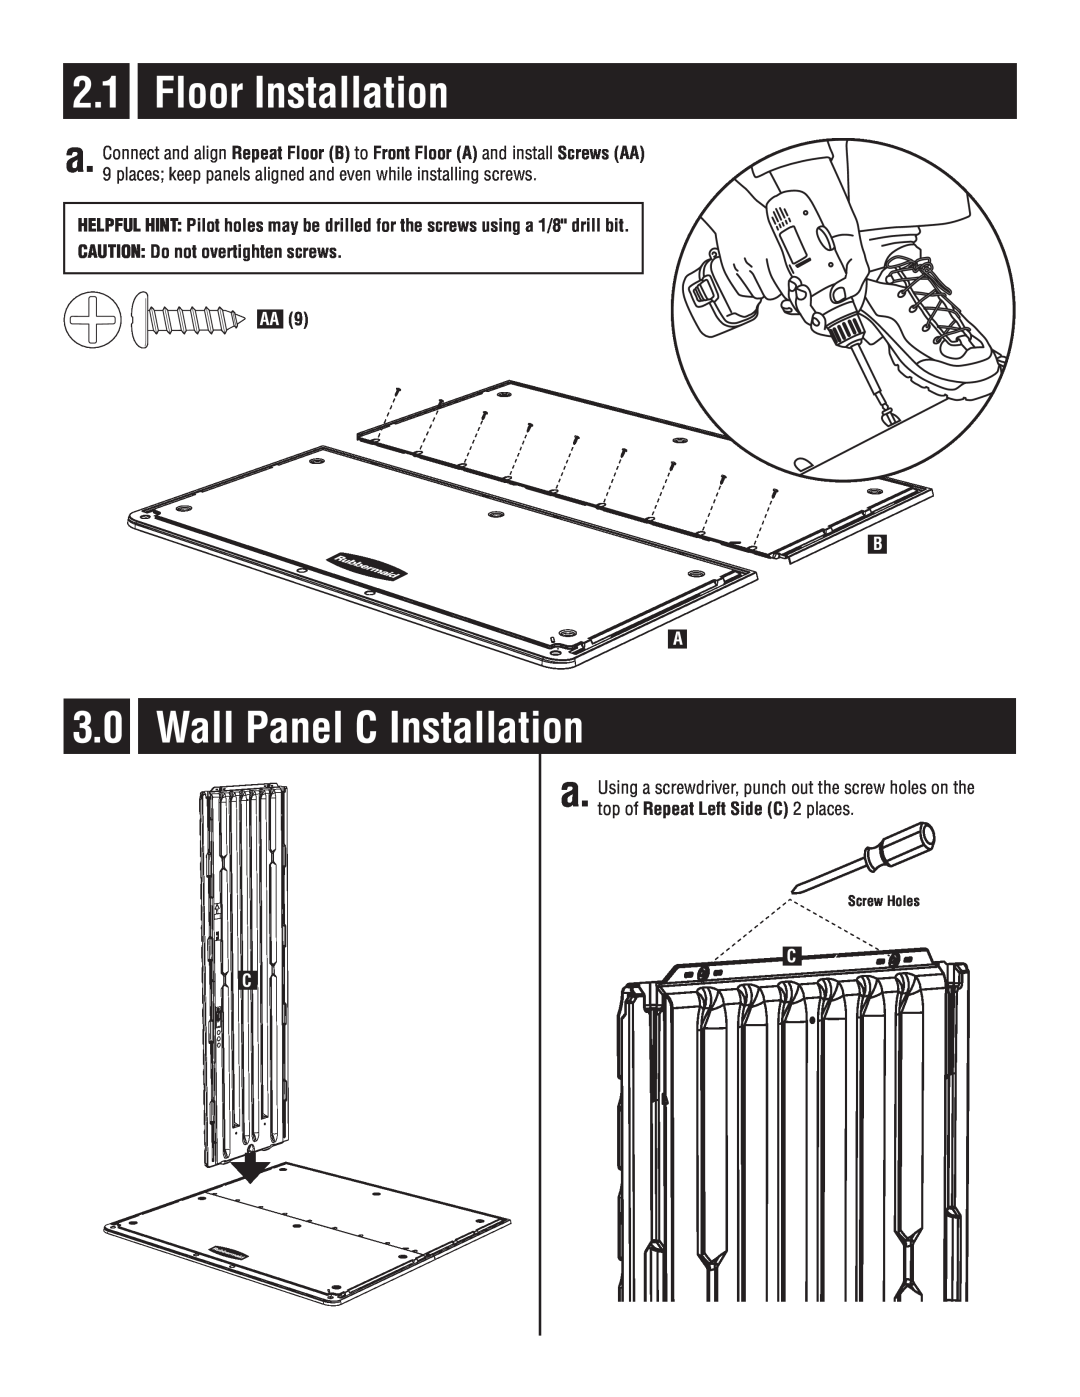 Rubbermaid P0-5L20-P0 Floor Installation, Wall Panel C Installation, CAUTION Do not overtighten screws, Screw Holes 